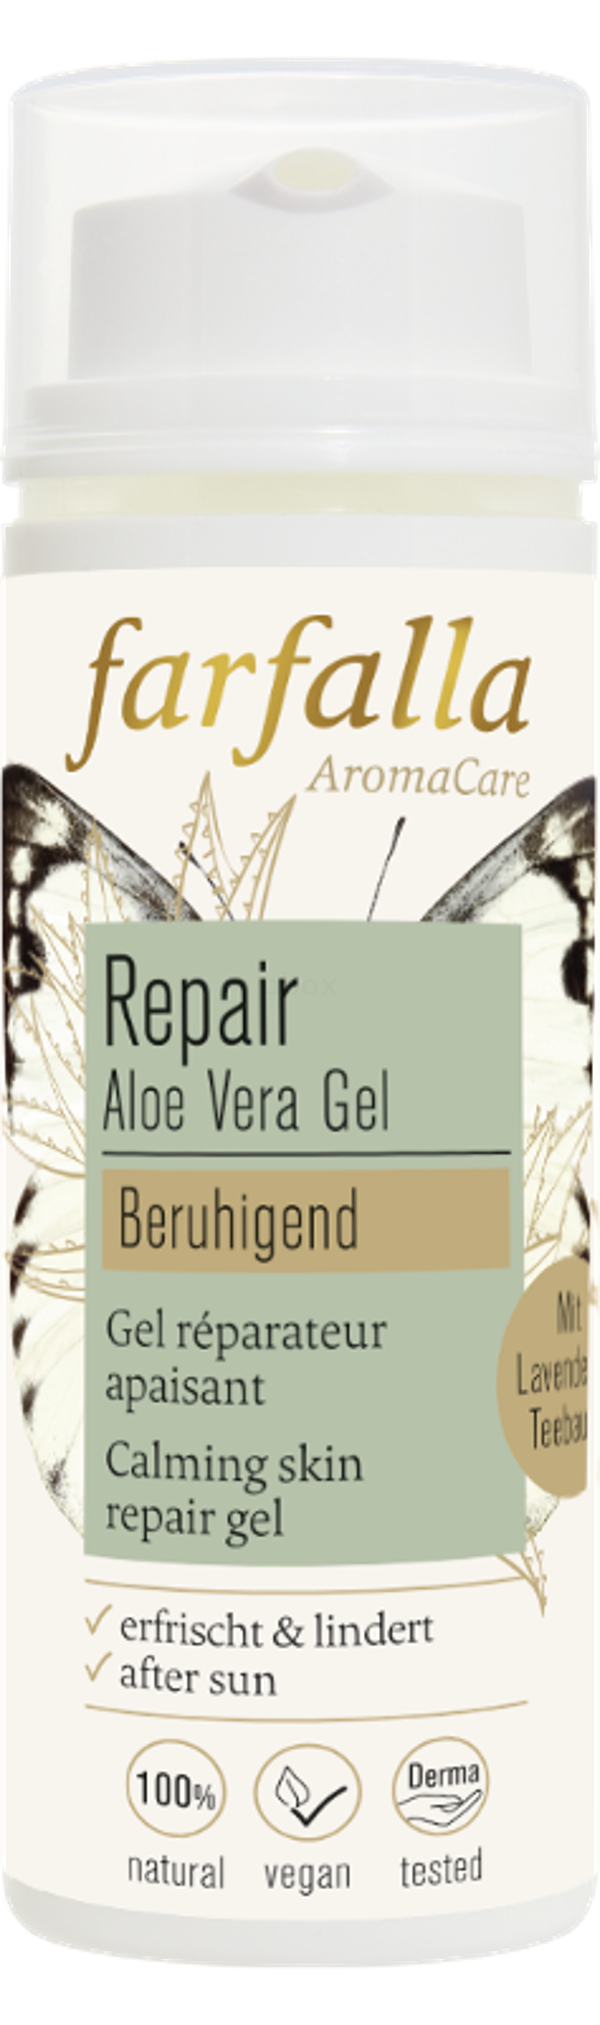 Produktfoto zu Aloe Vera Hautberuhigendes Repair Gel